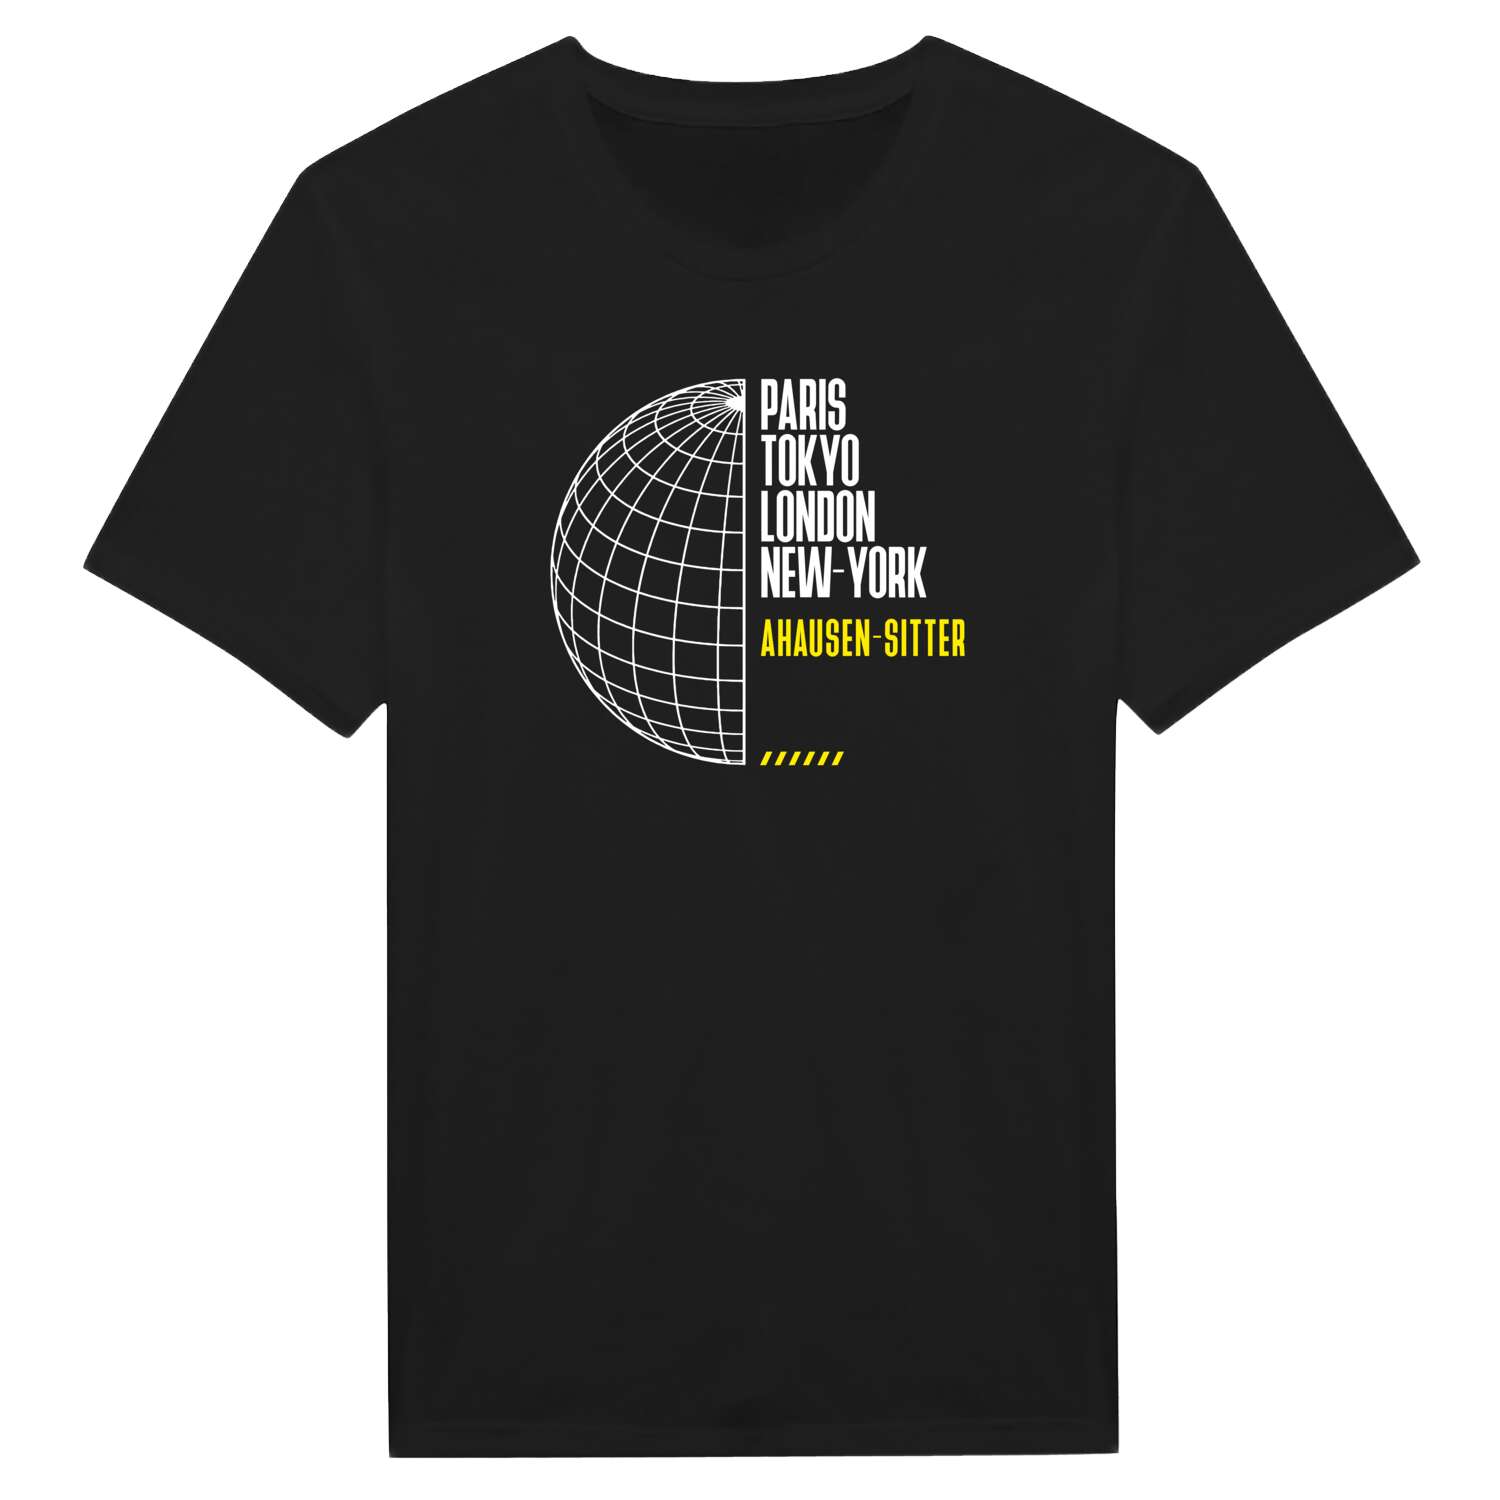 Ahausen-Sitter T-Shirt »Paris Tokyo London«